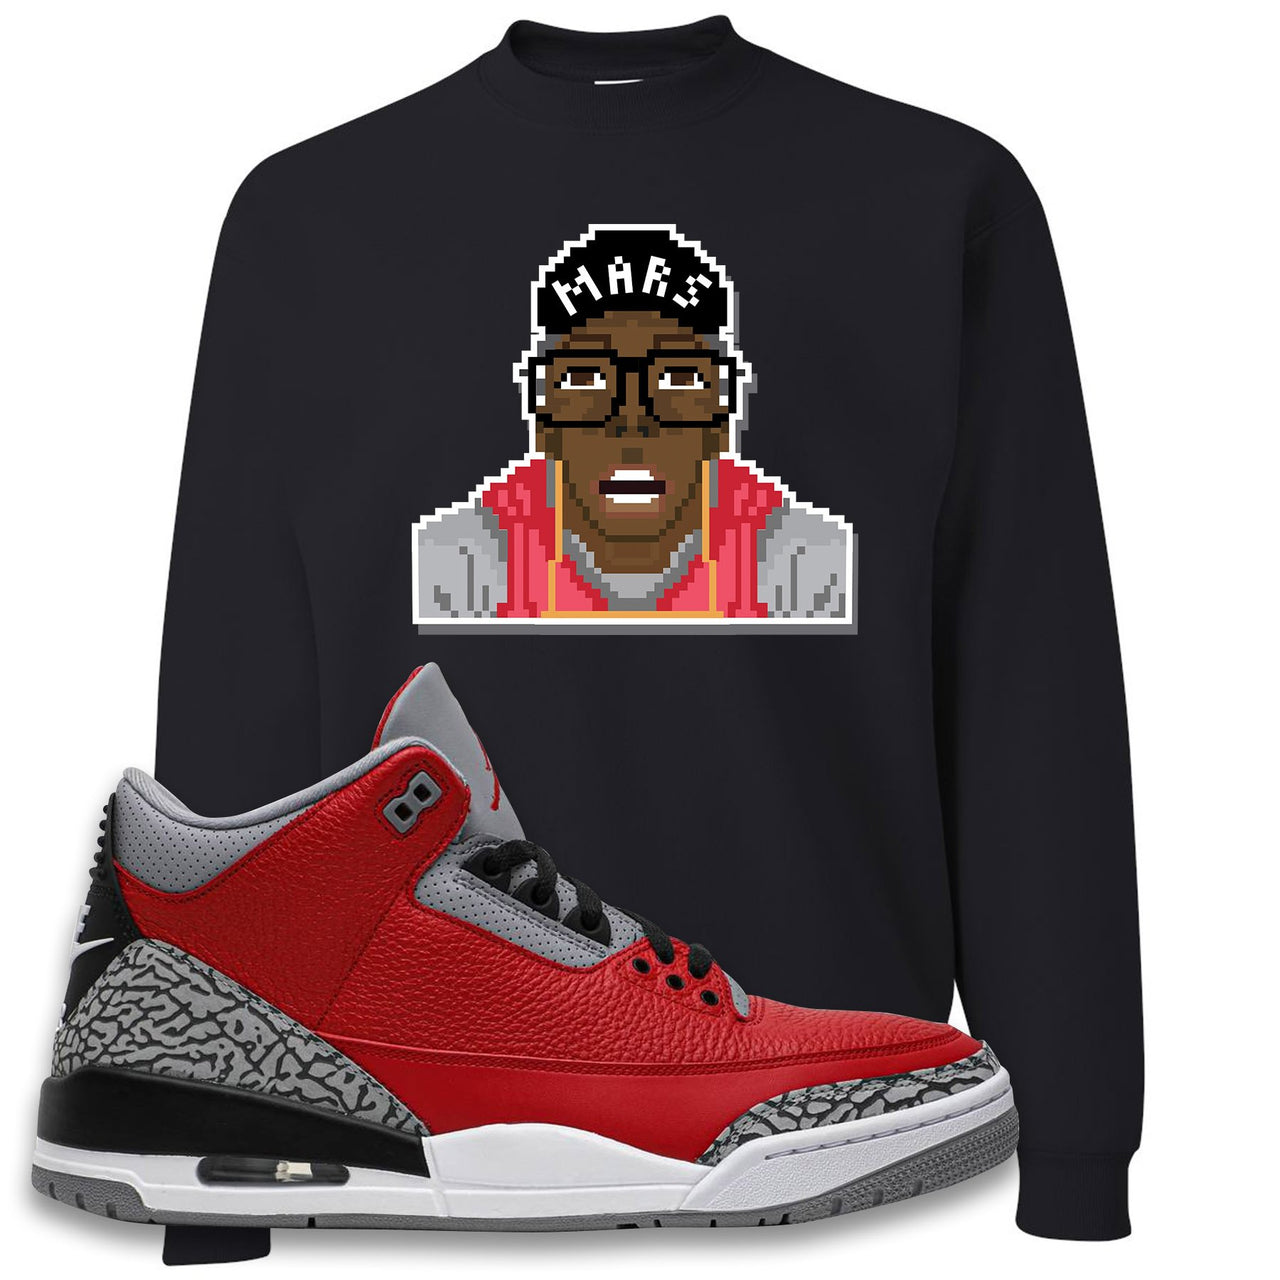 Chicago Exclusive Jordan 3 Red Cement Sneaker Black Crewneck Sweatshirt | Crewneck to match Jordan 3 All Star Red Cement Shoes | Mars Pixel